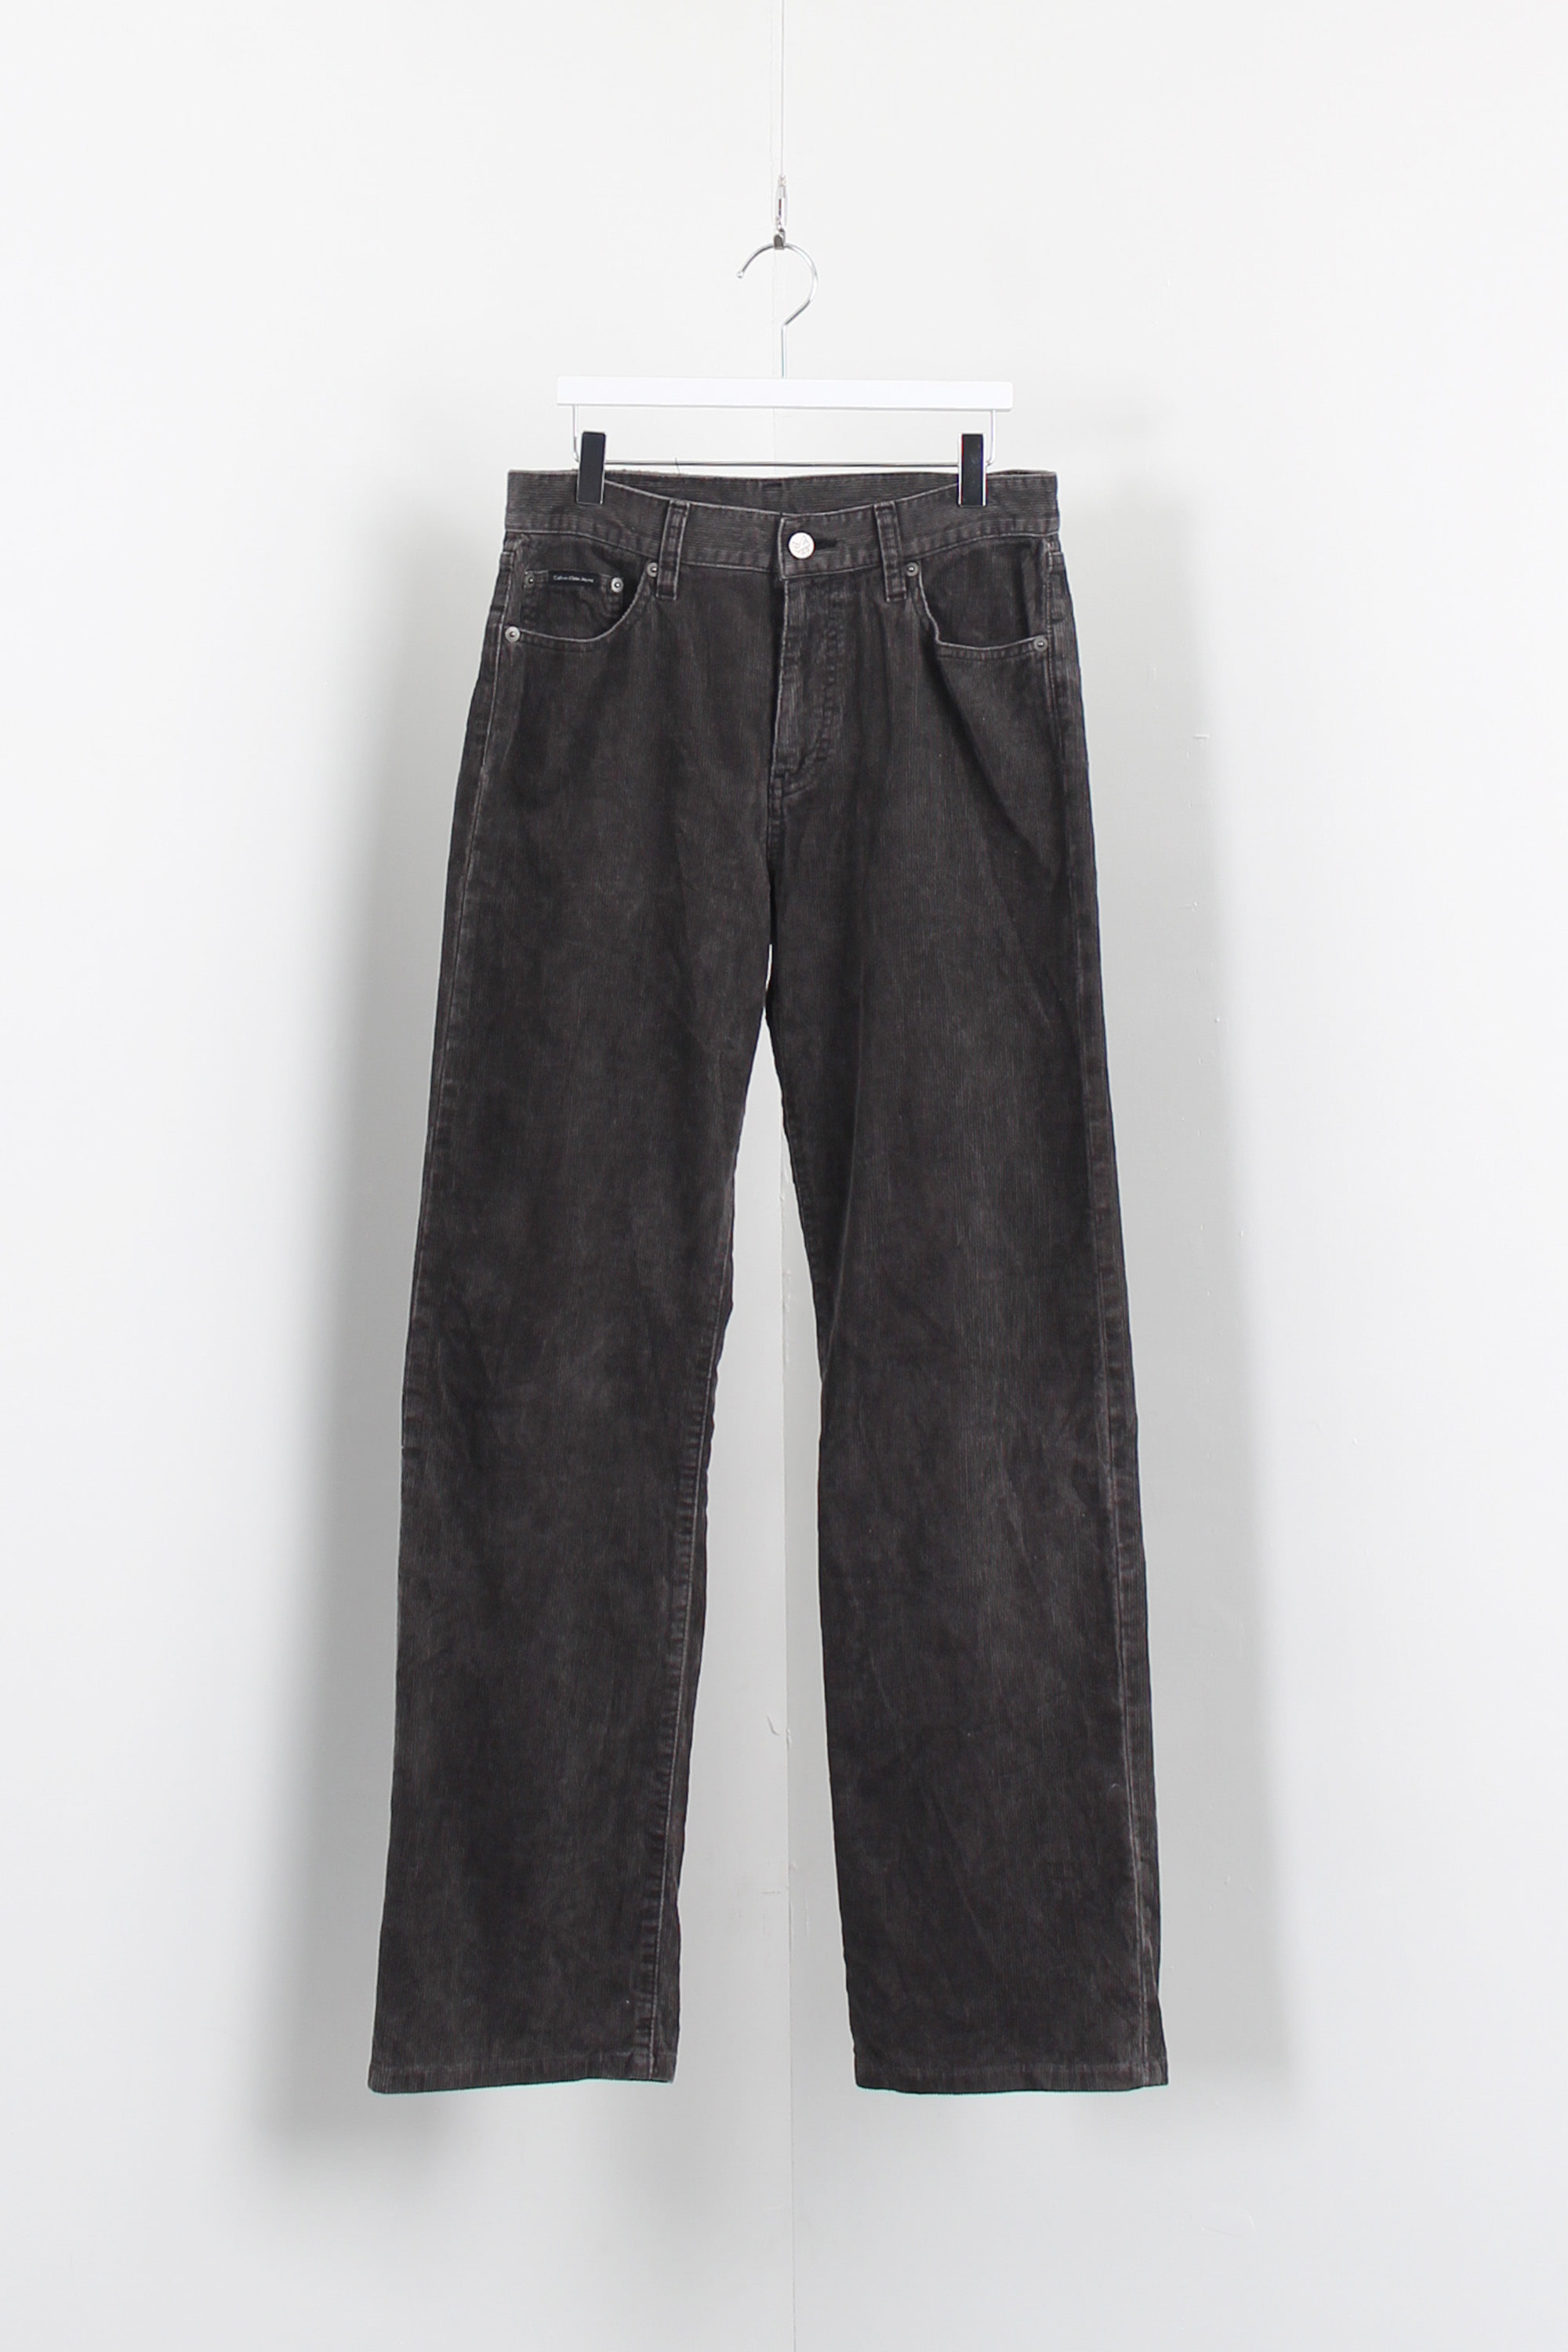 Calvin Klein corduroy pants